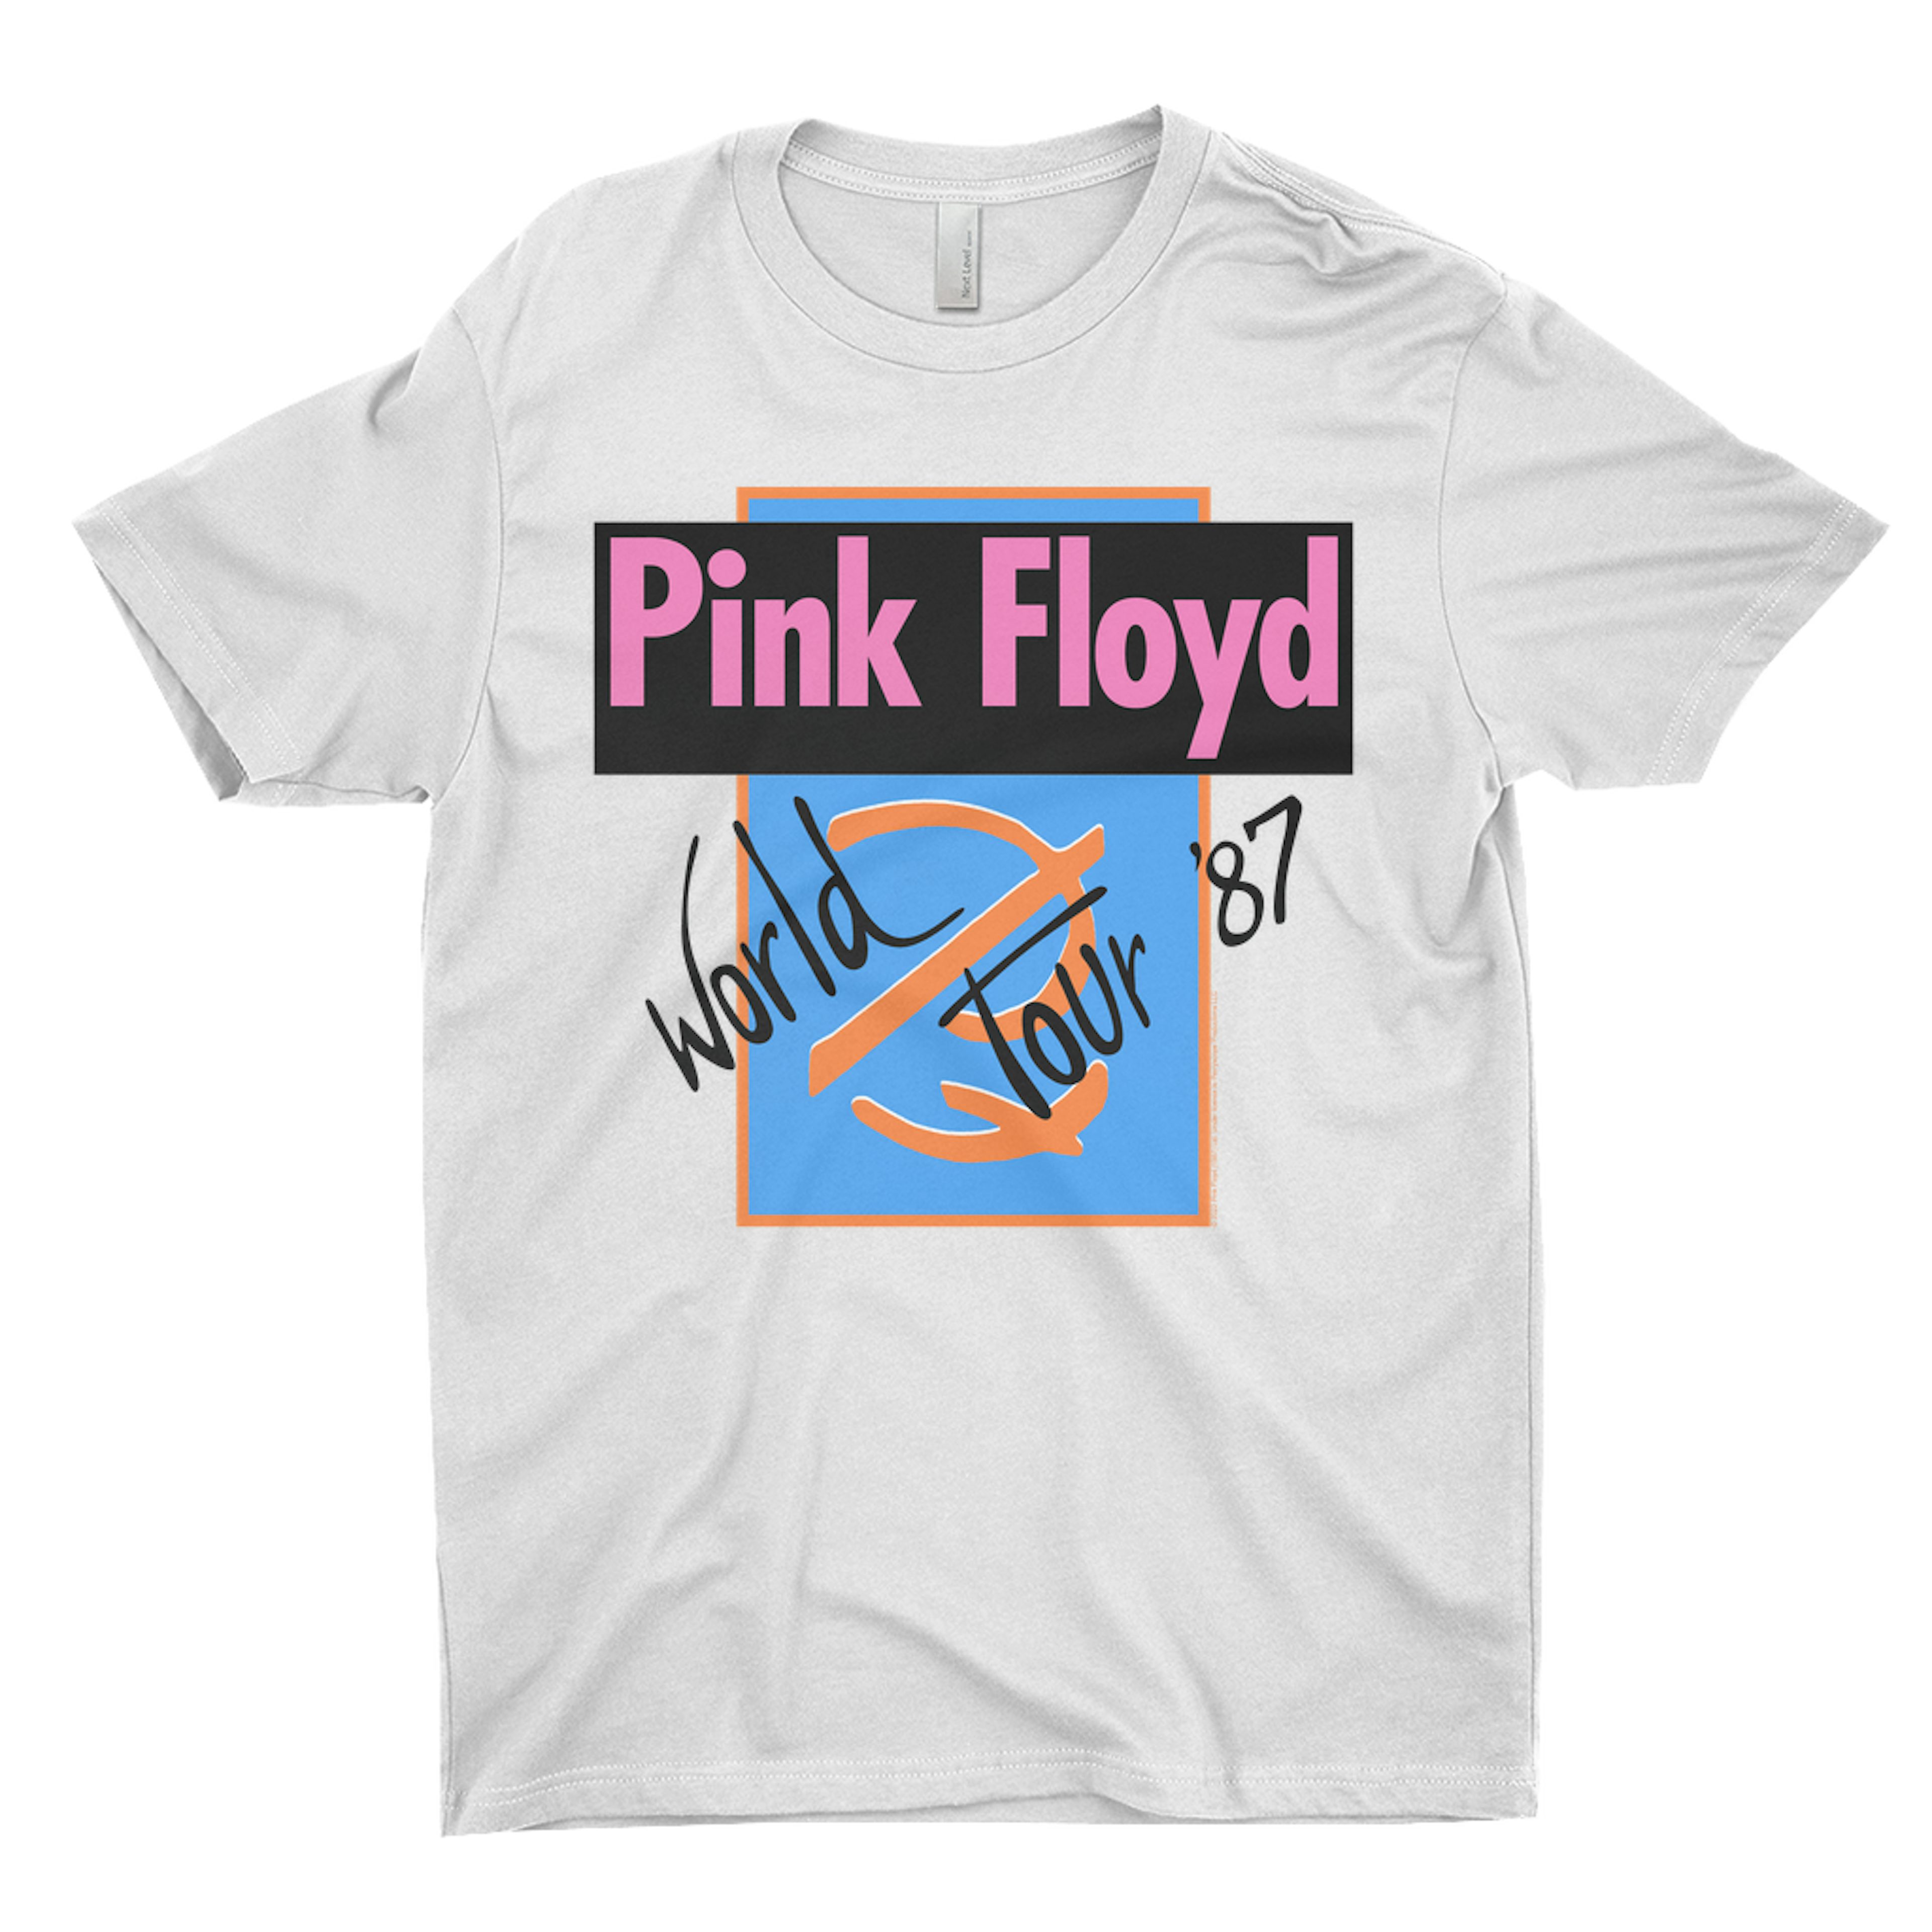 Pink Floyd T-Shirt | World Tour '87 Logo Pink Floyd Shirt